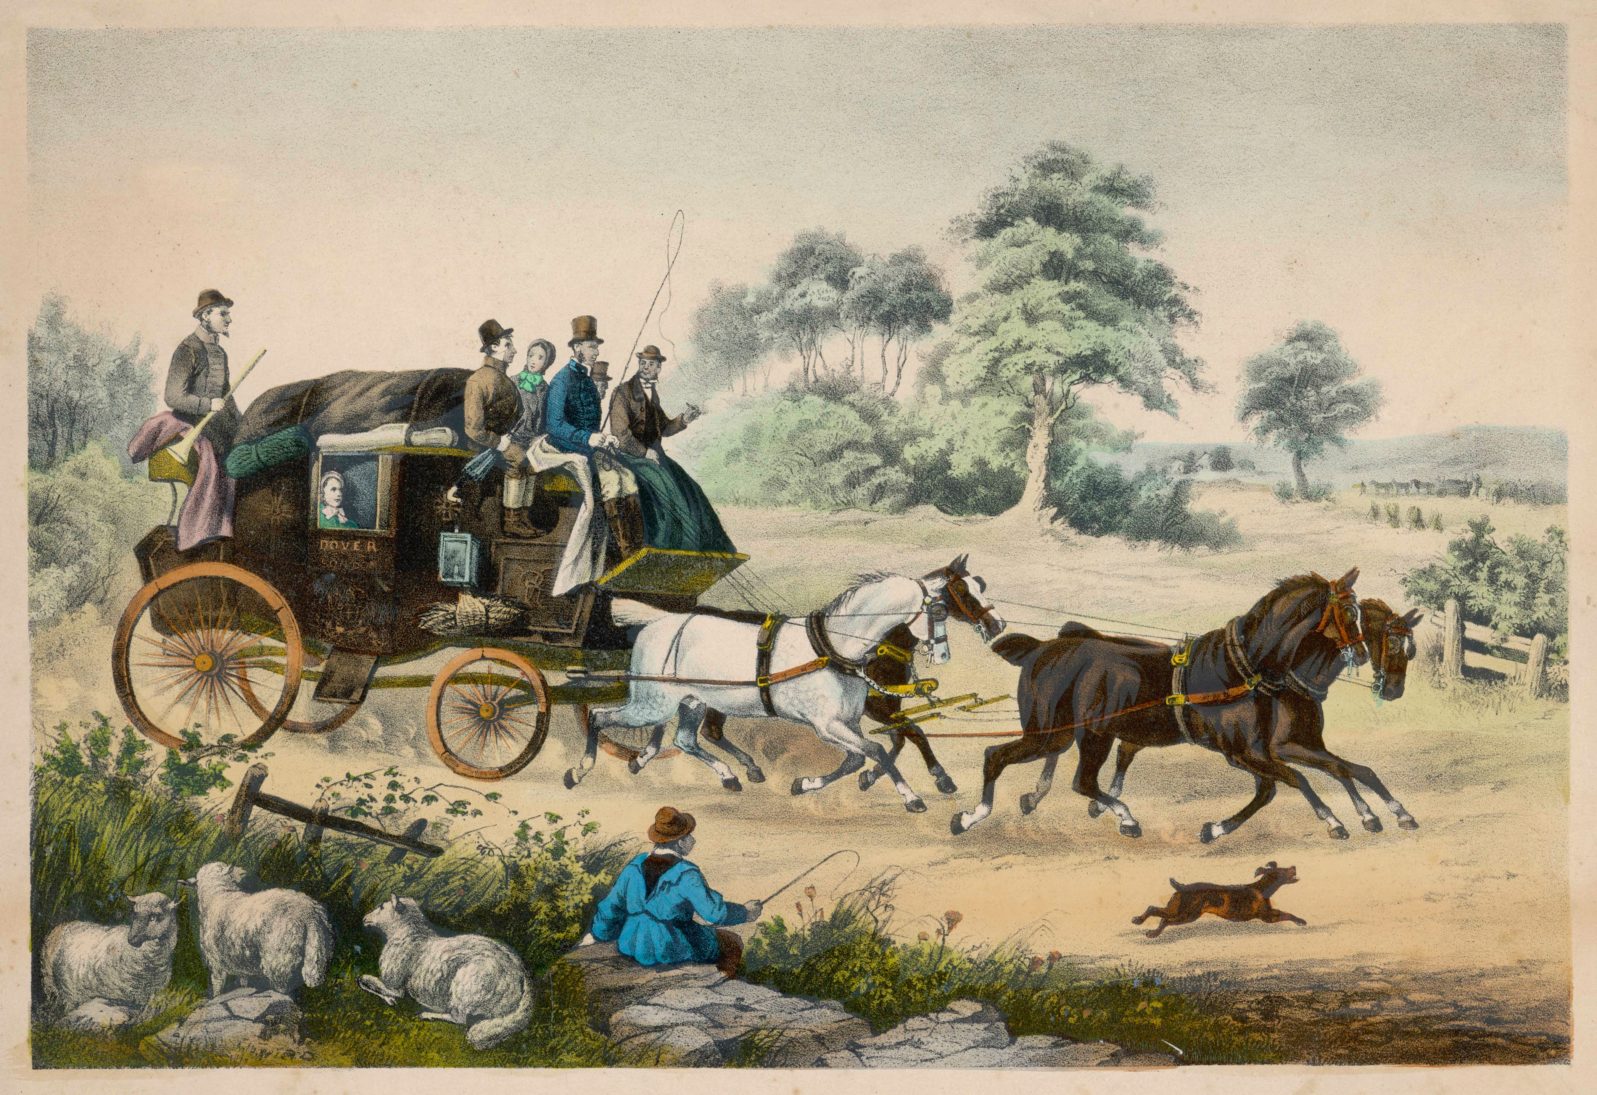 Stagecoach - Shepherd Boy. Date: circa 1840